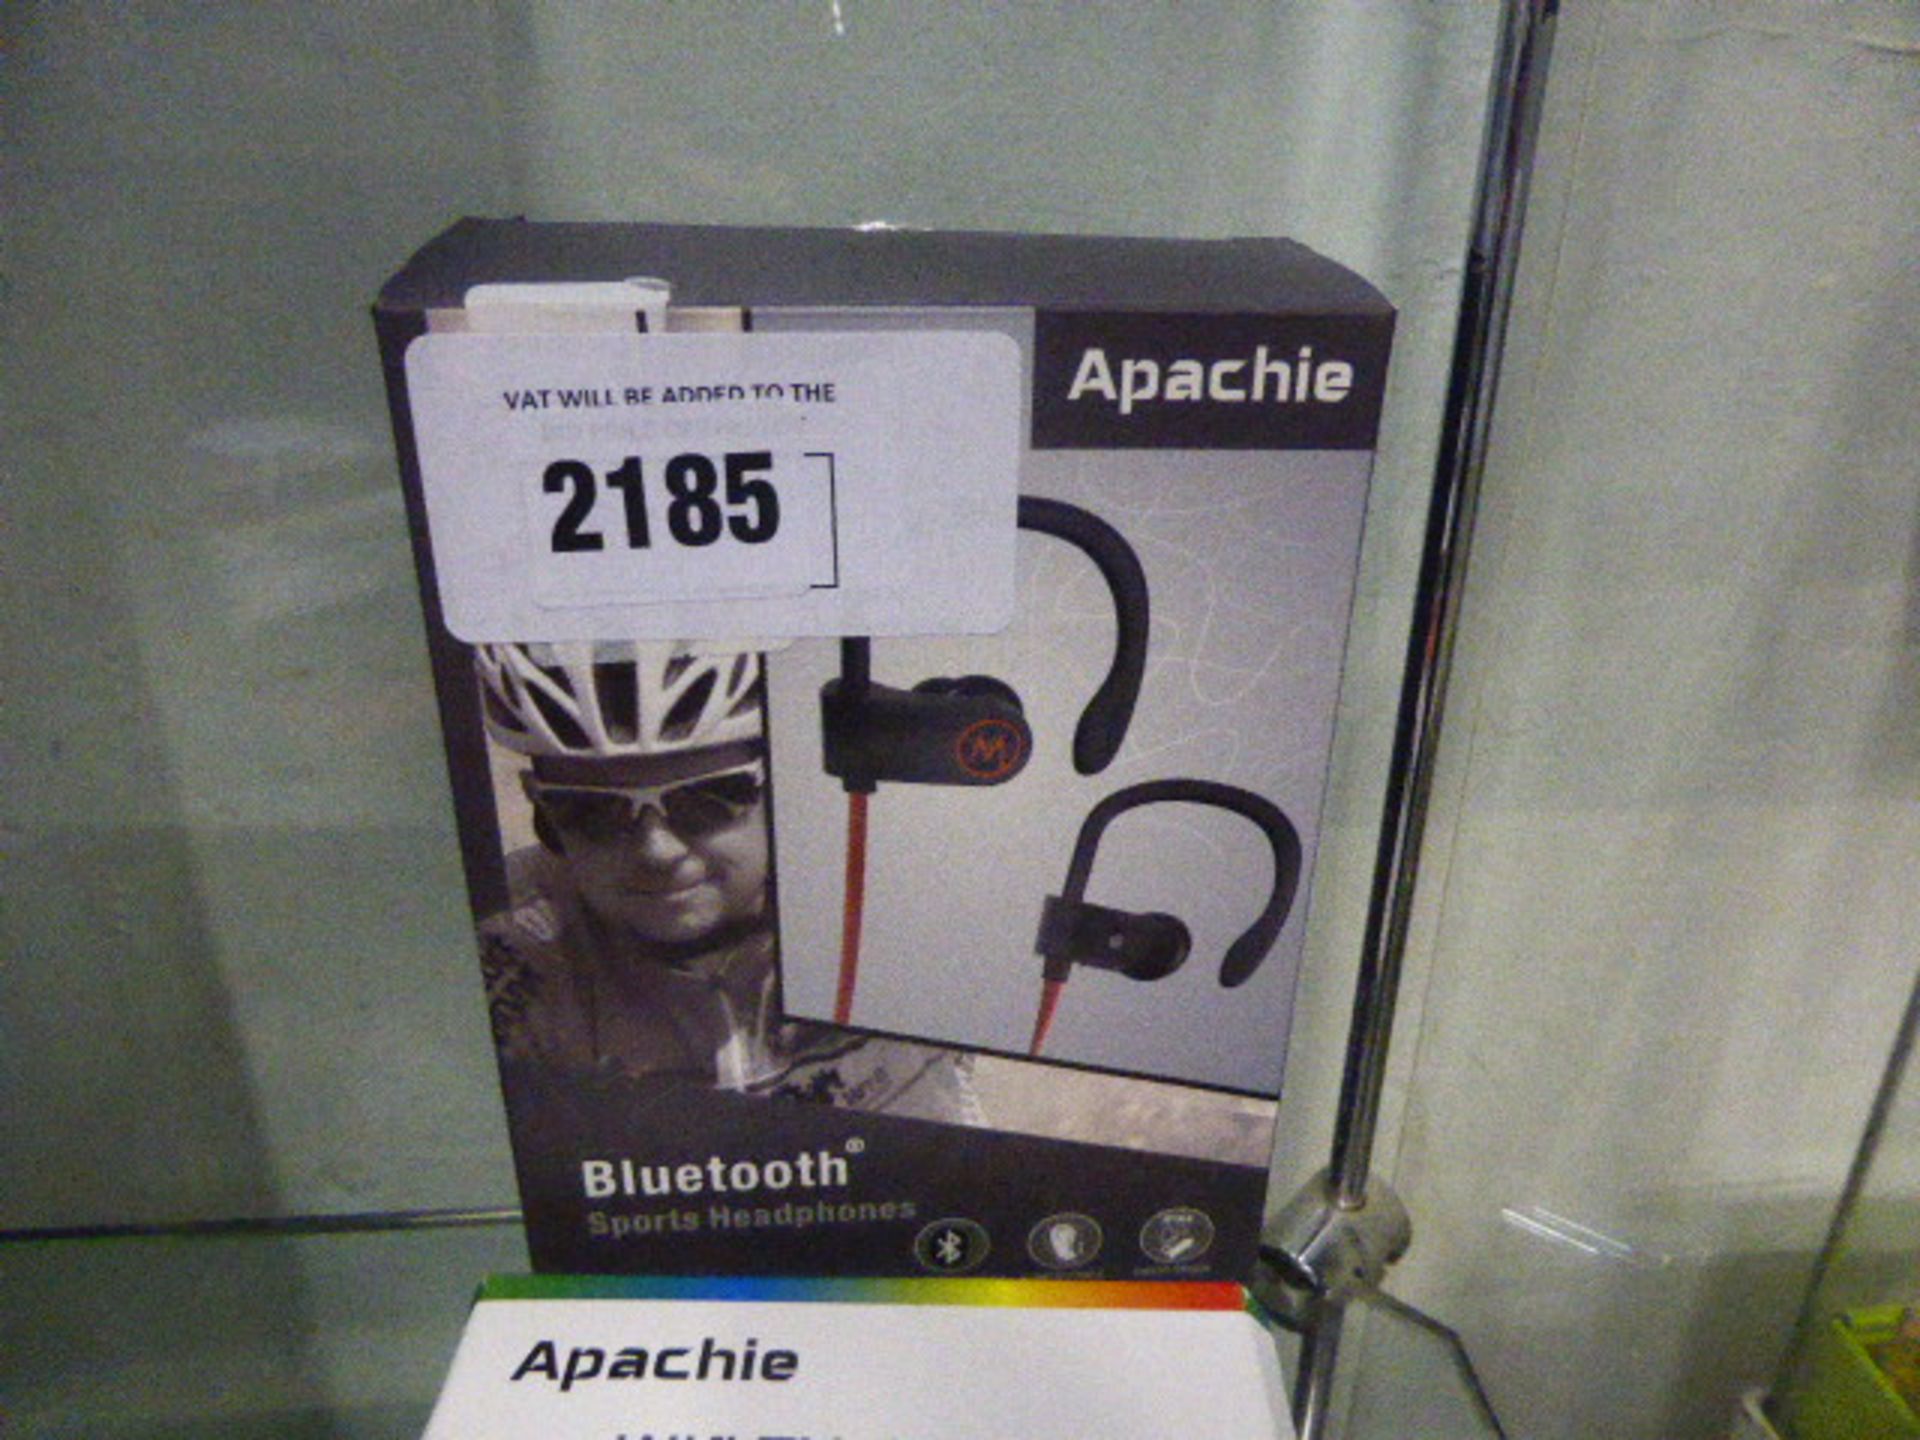 Pair of Apachie bluetooth sports earphones